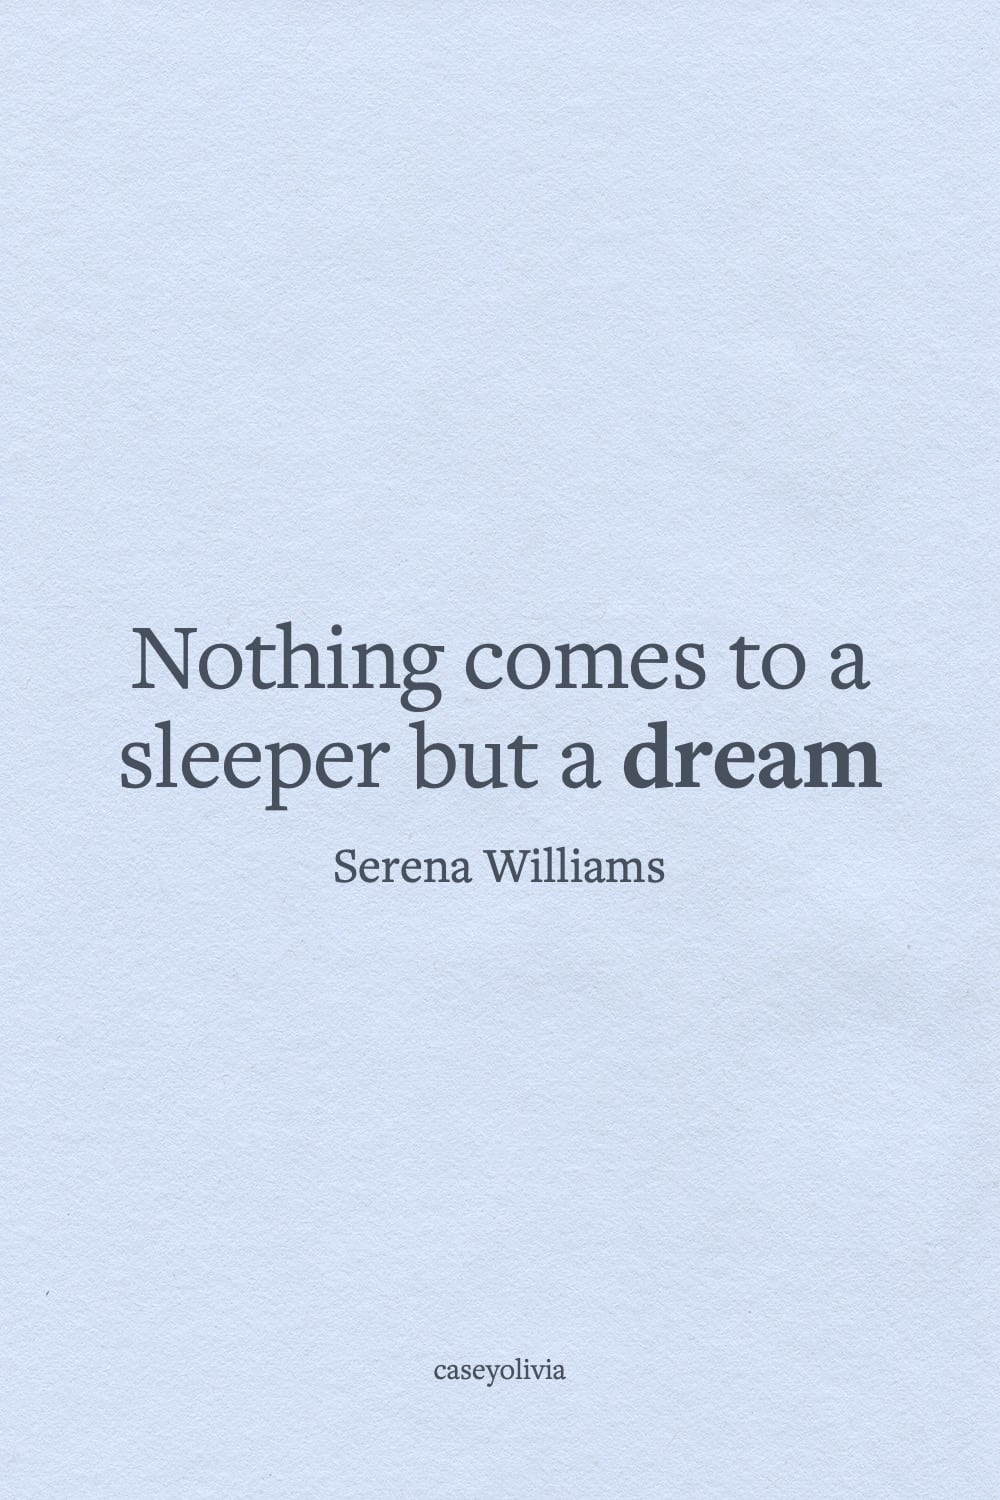 motivational mindset short serena williams quote